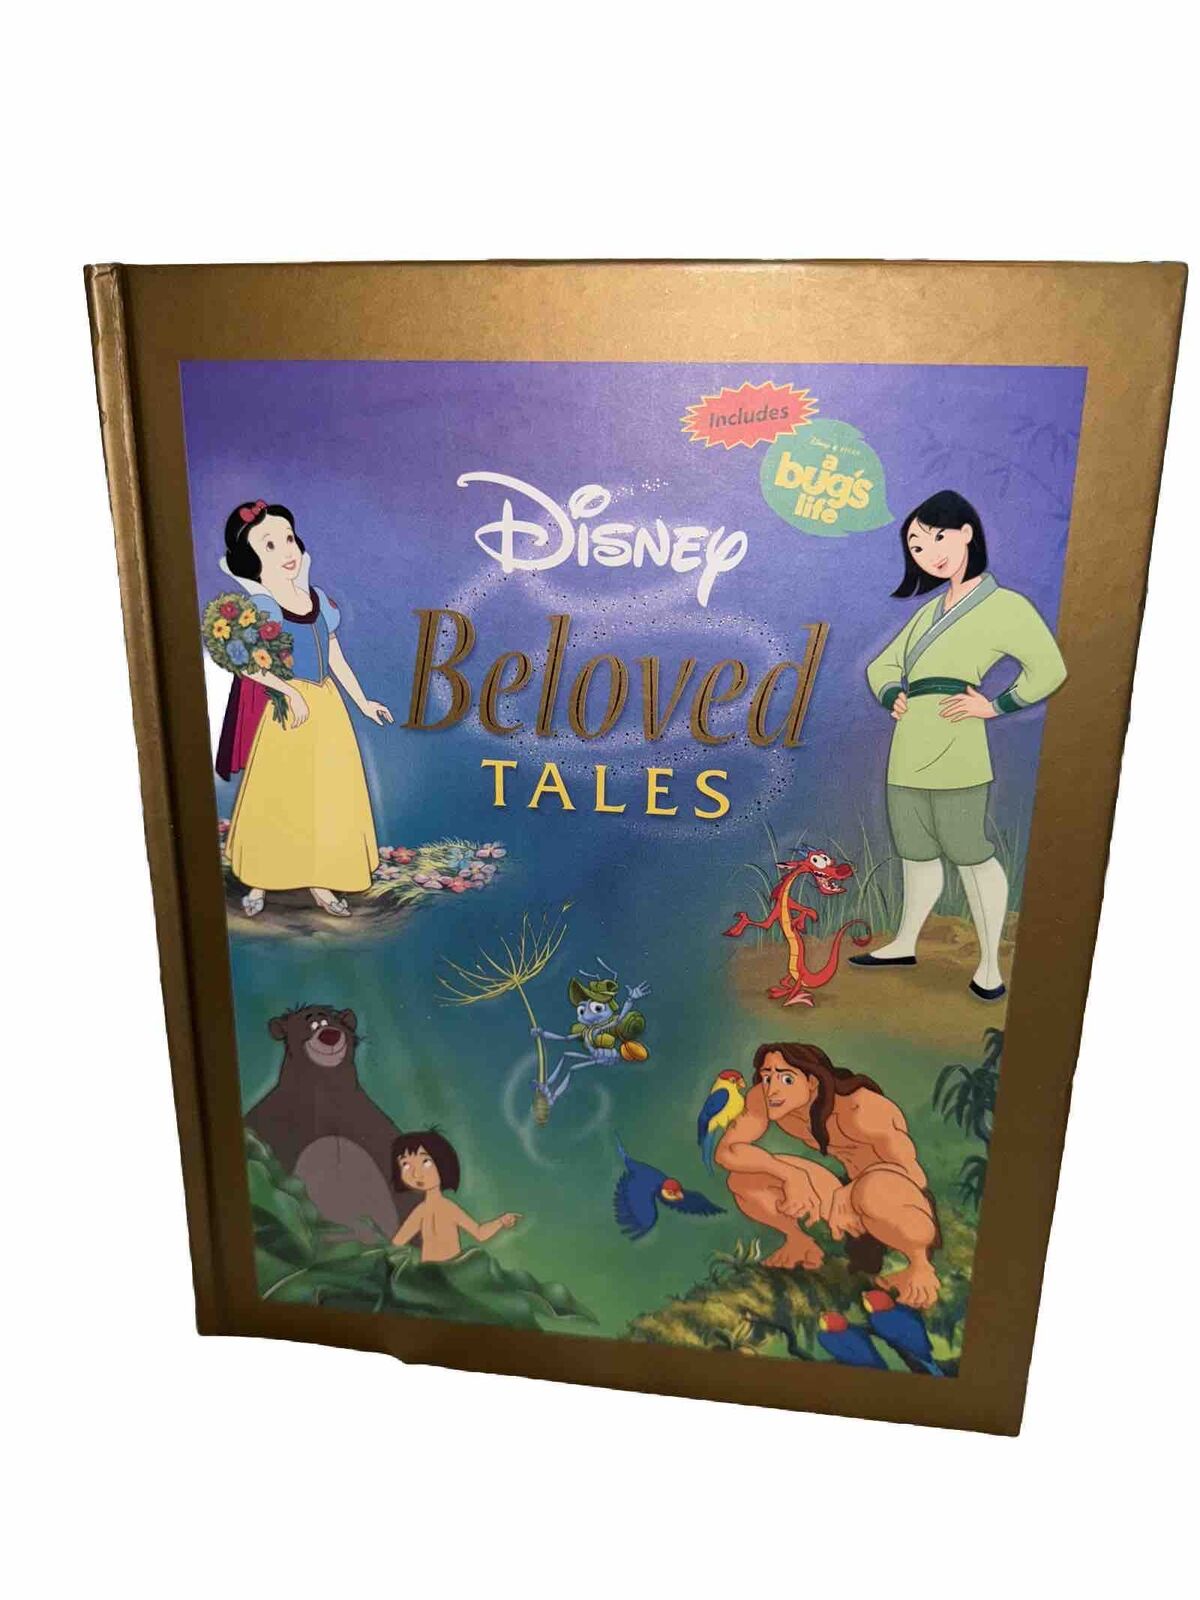 Vintage 2003 Disney Beloved Tales Children’s Book